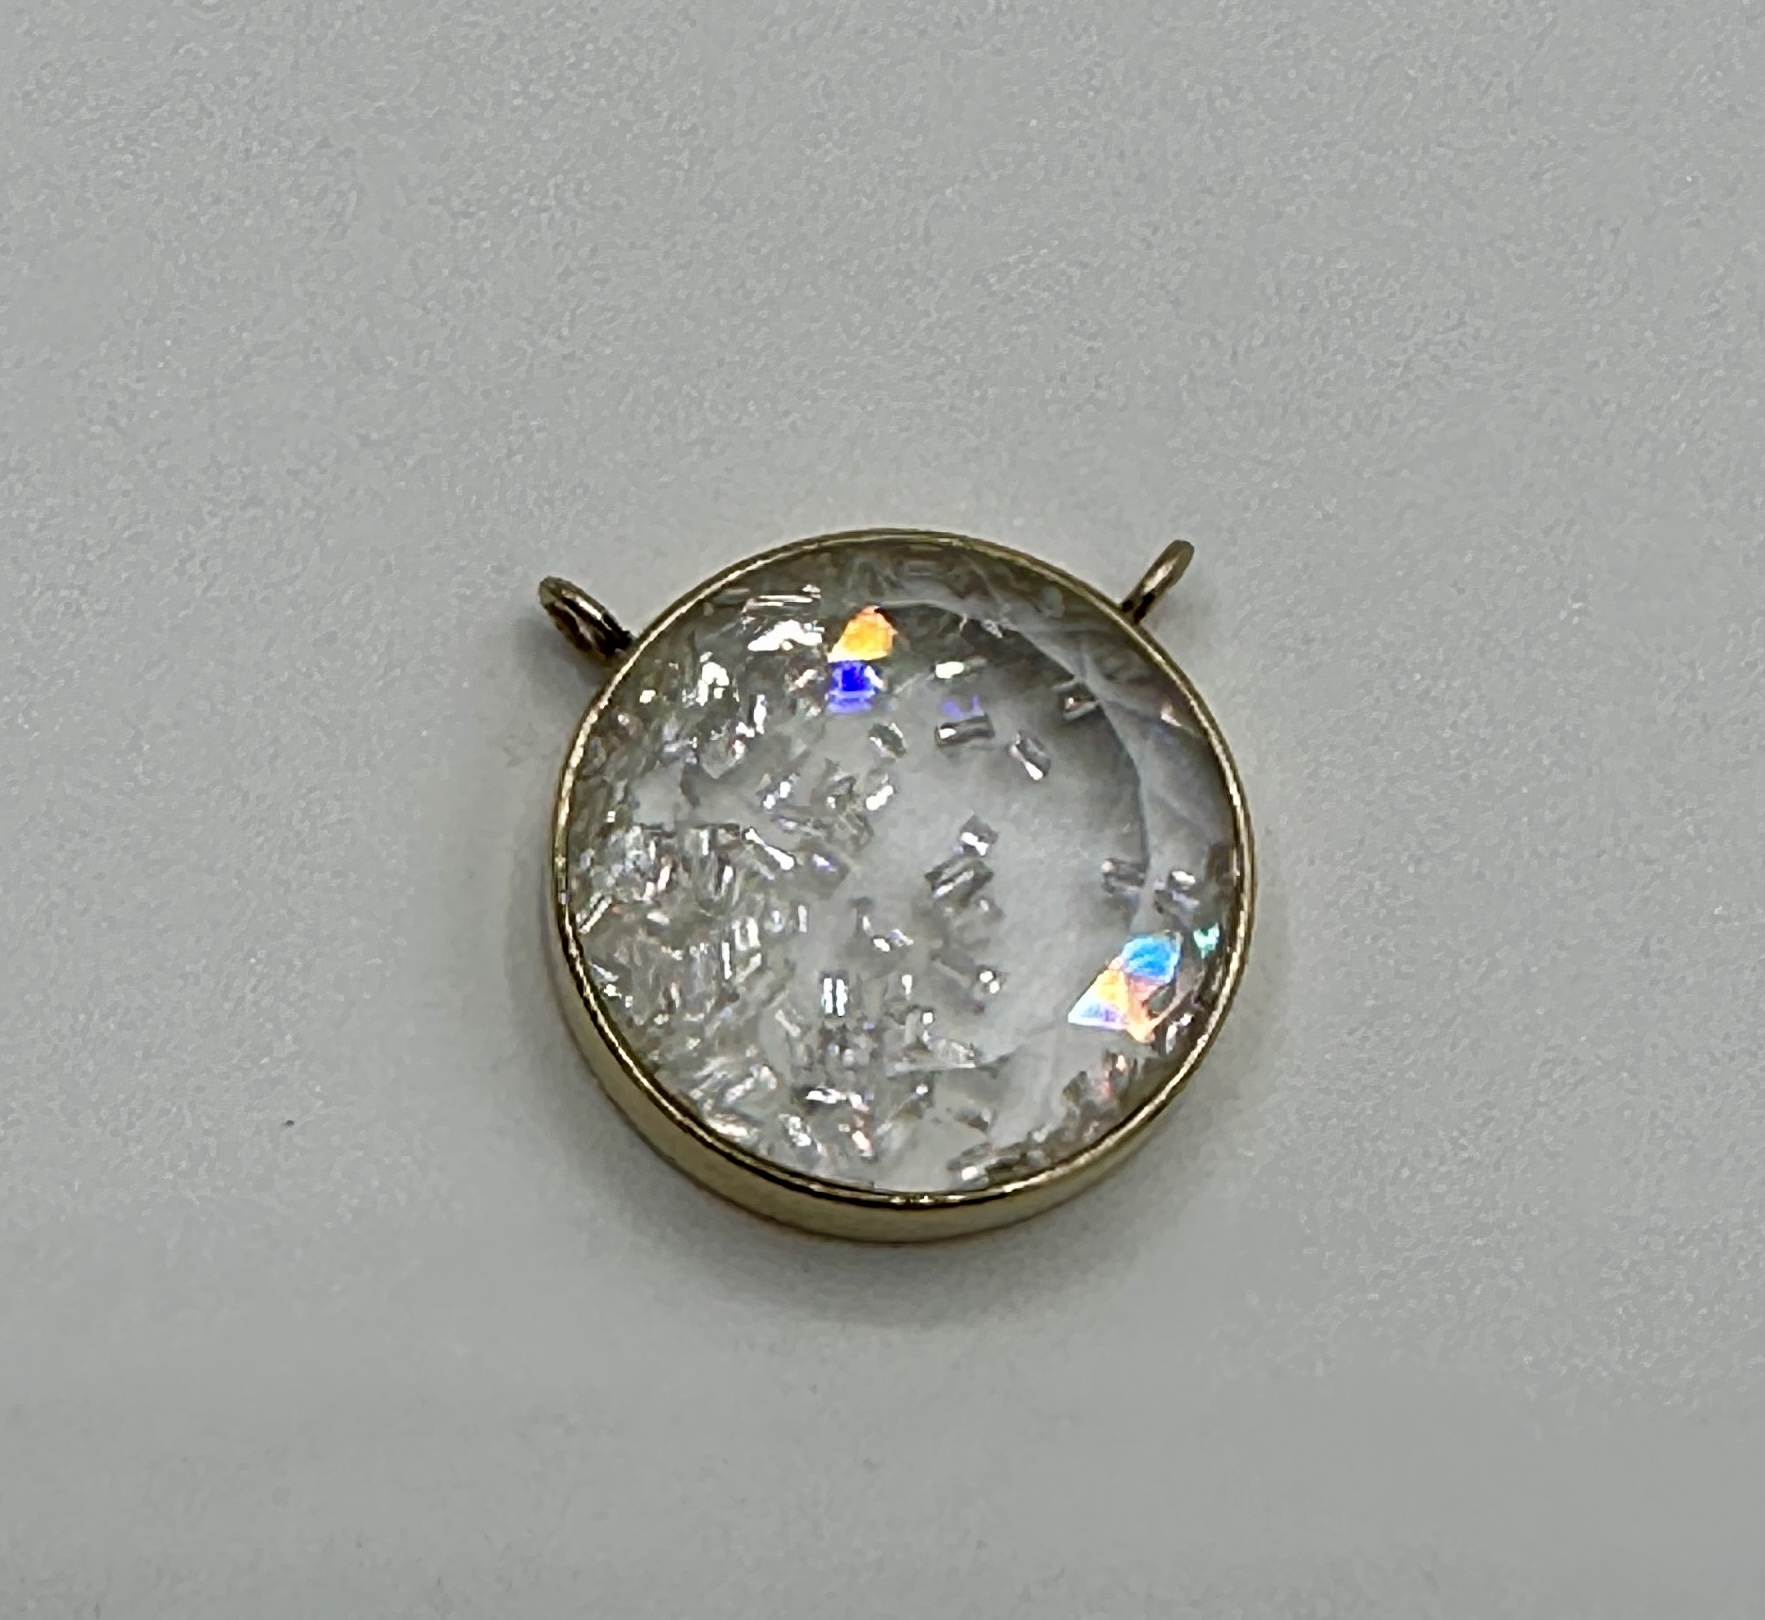 18 Karat Yellow Gold Diamond Shaker Centerpiece. 1.0 Carats Diamonds, 12.21 Carat Sapphire Crystal in a Beveled Cut